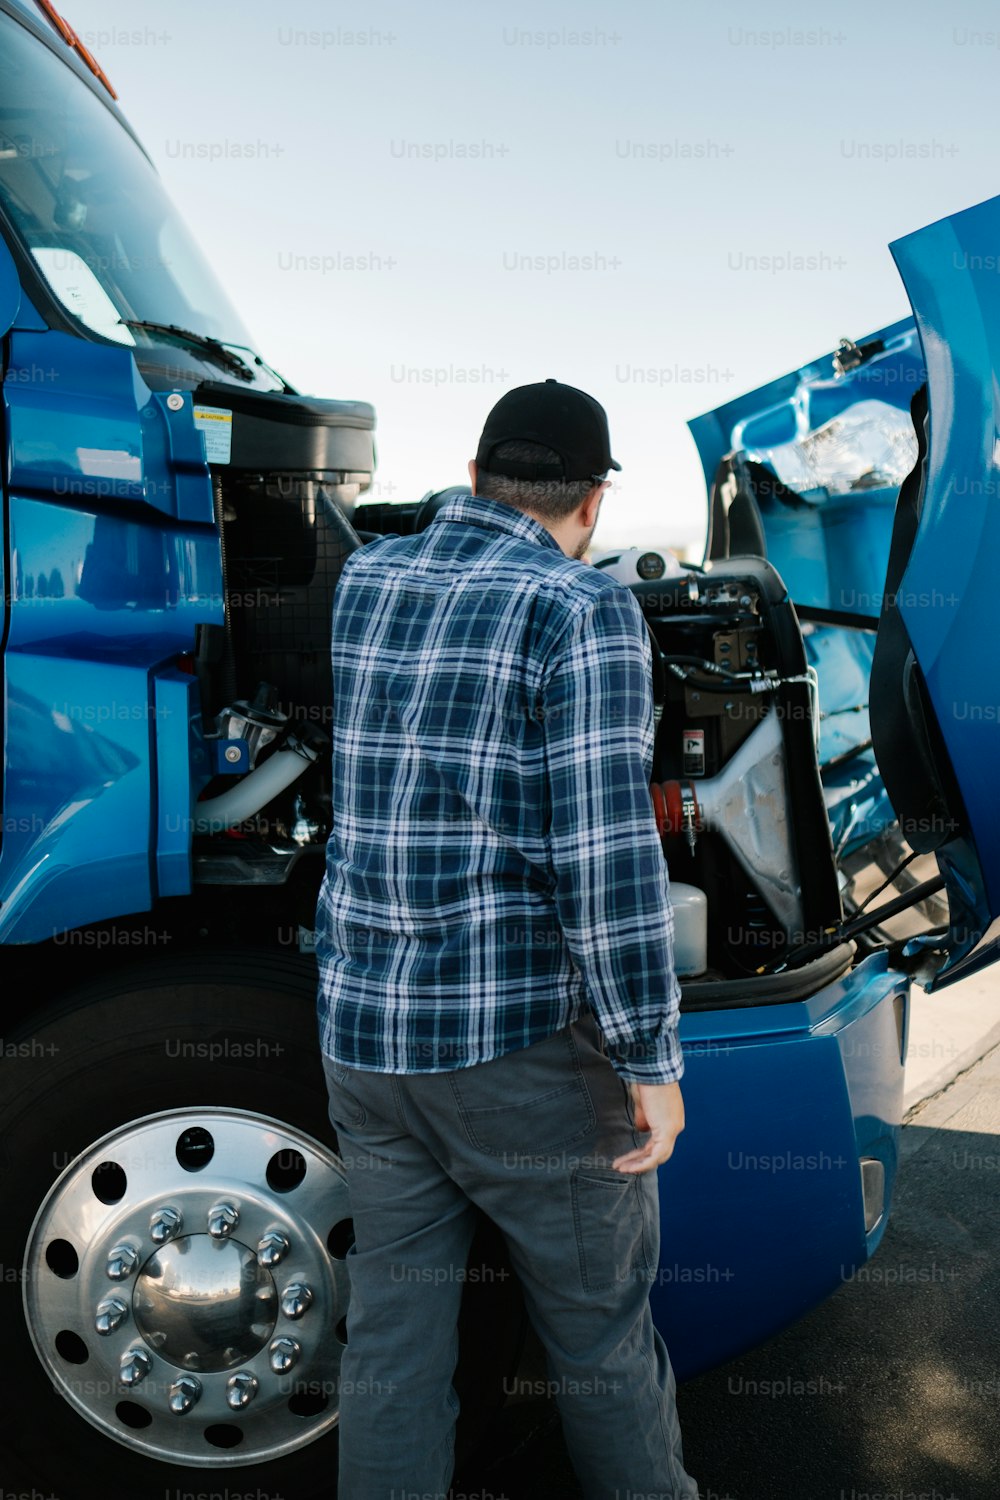 a man standing next to a blue semi truck